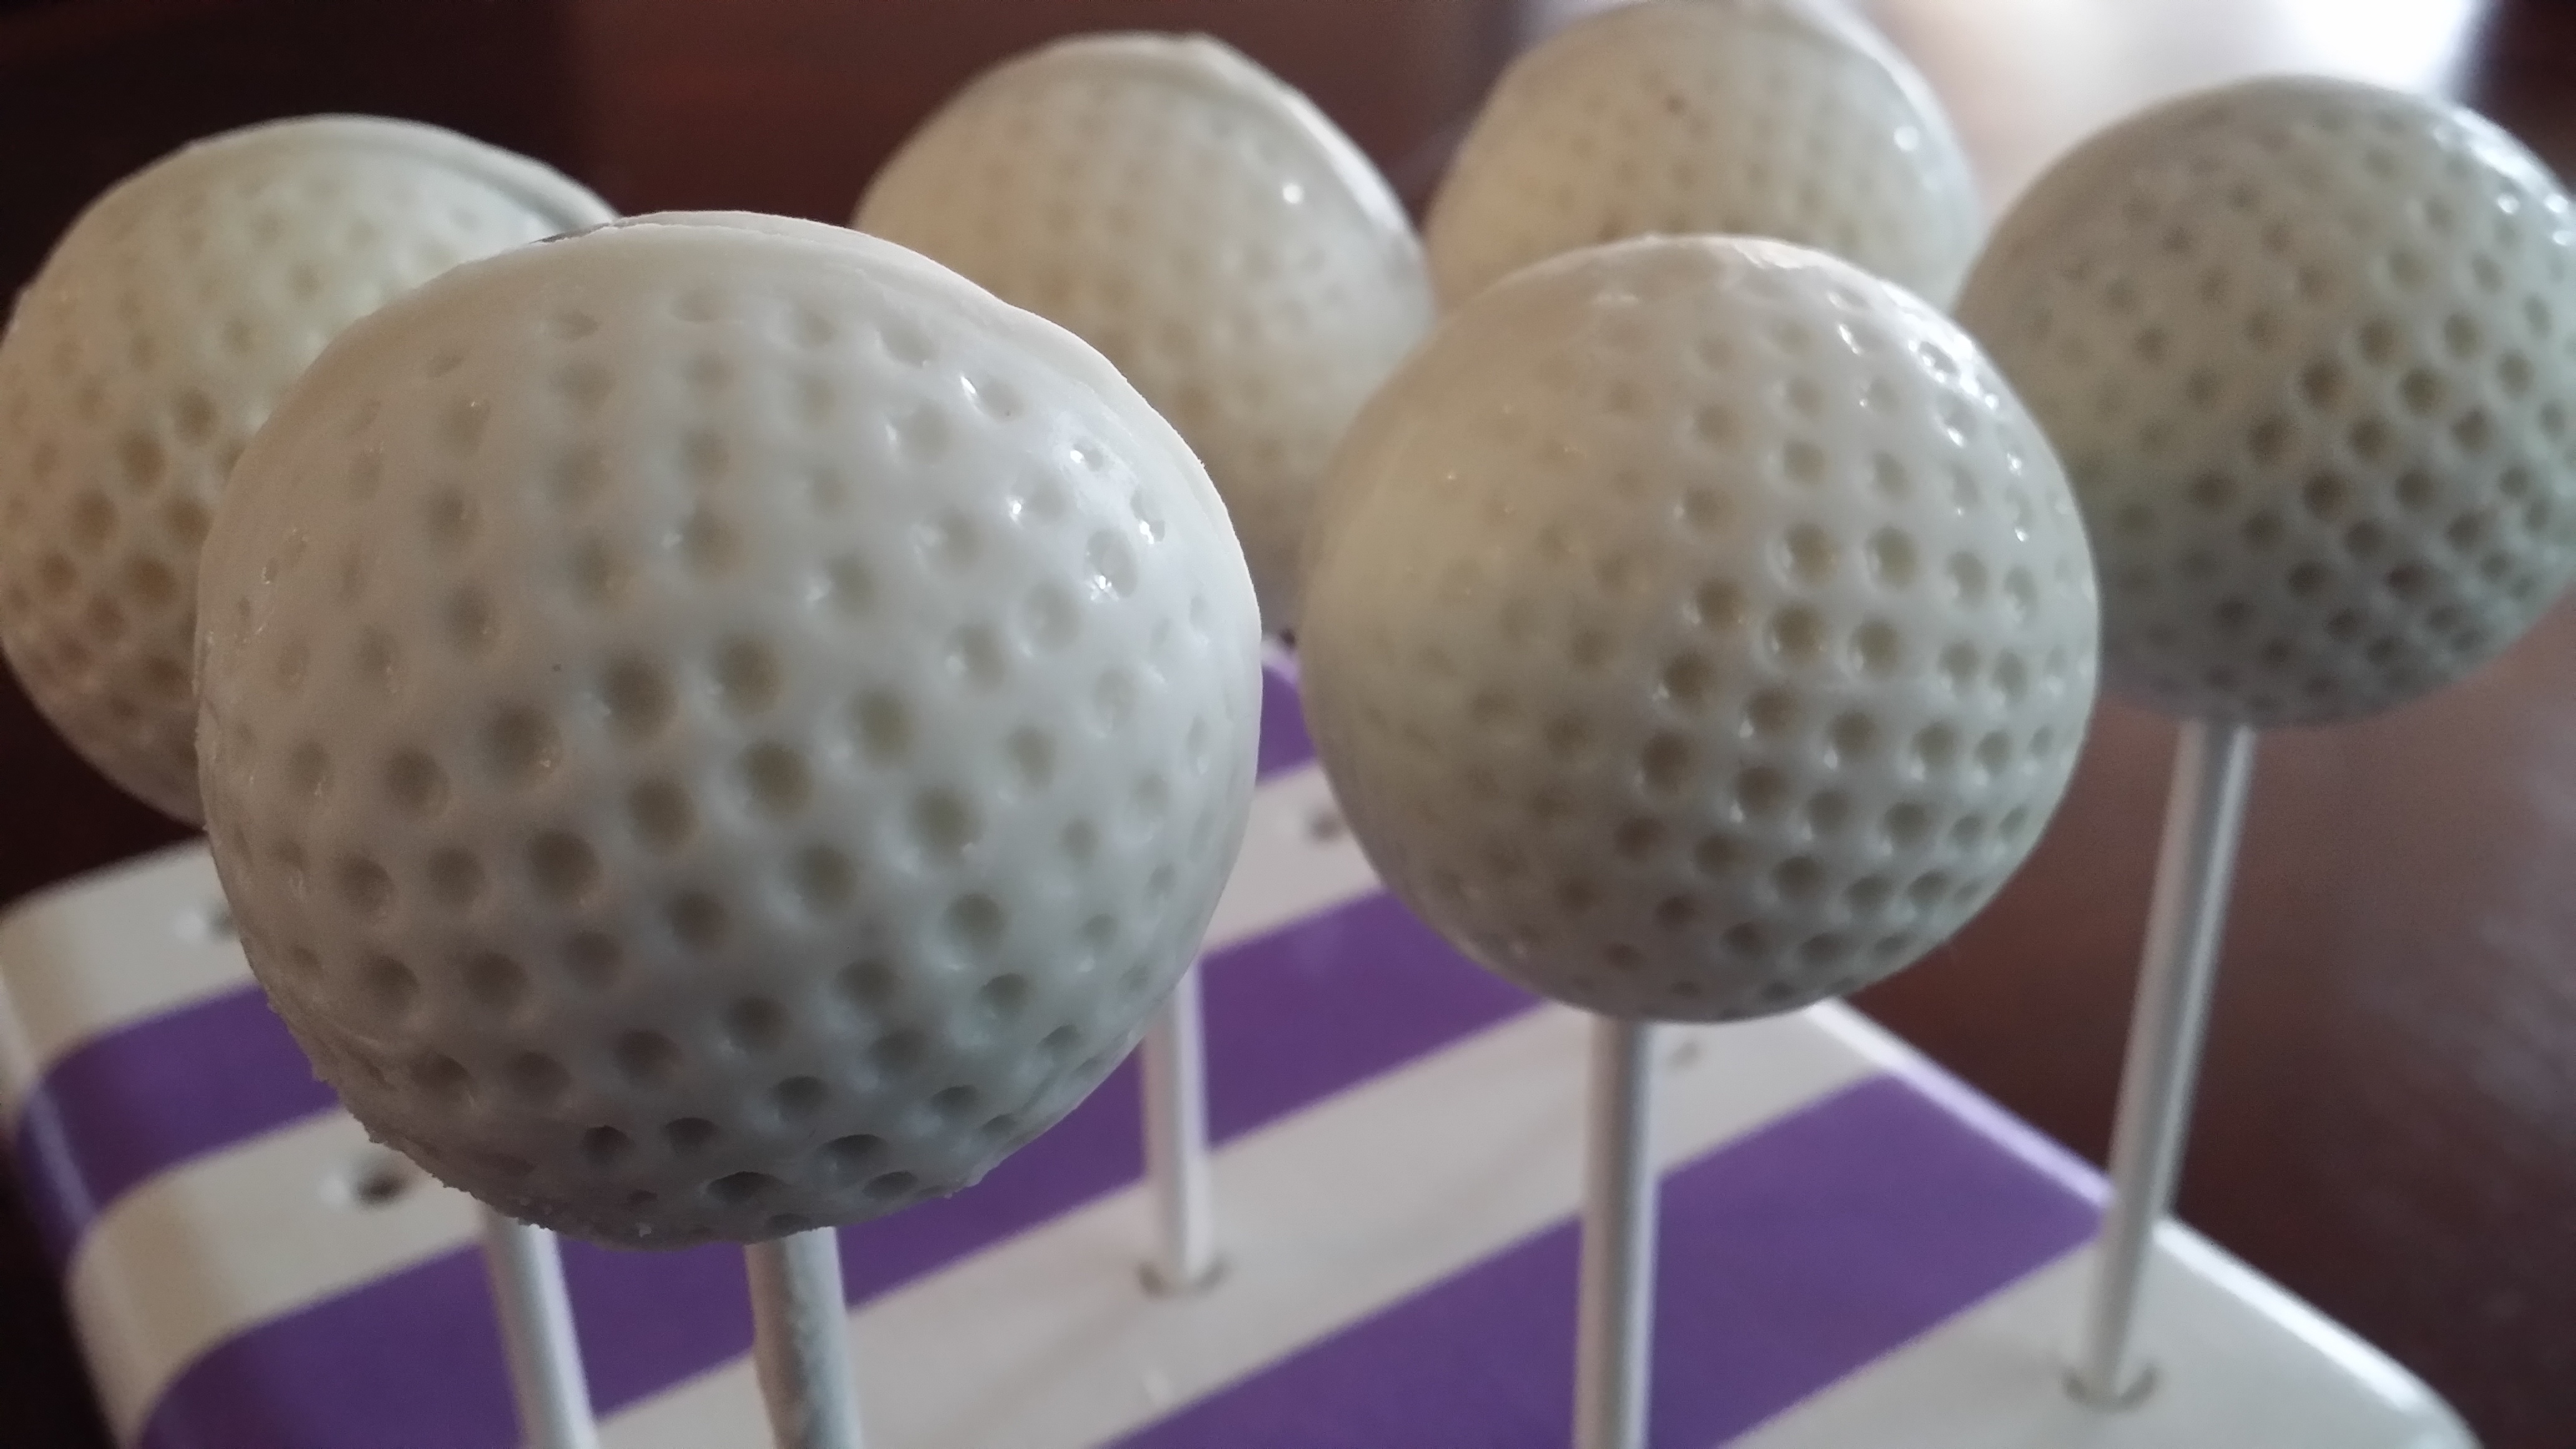 Golf Ball Cake Balls  Golf cake, Golf ball cake, Cake balls